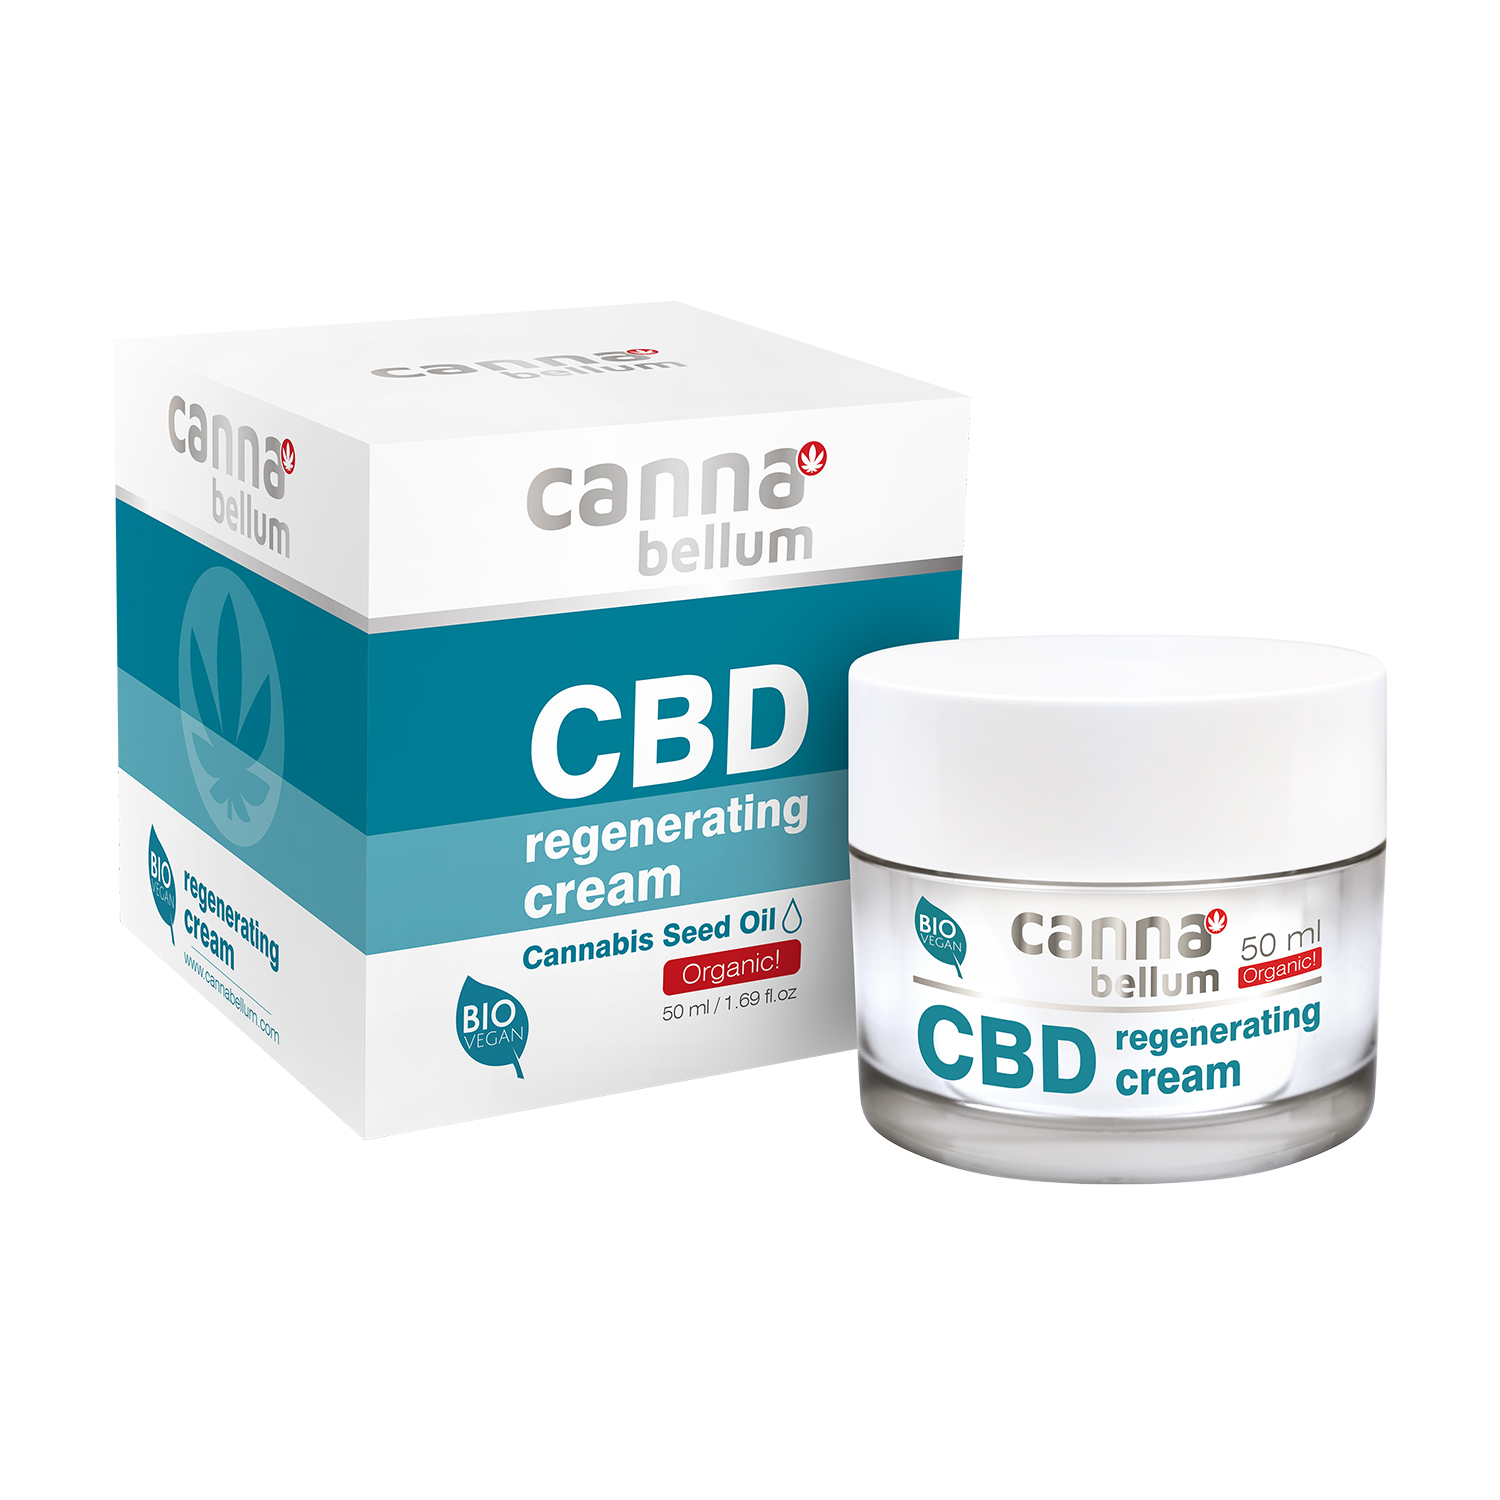 Cannabellum CBD regenerating cream 50ml P1253 komplet WEB 48